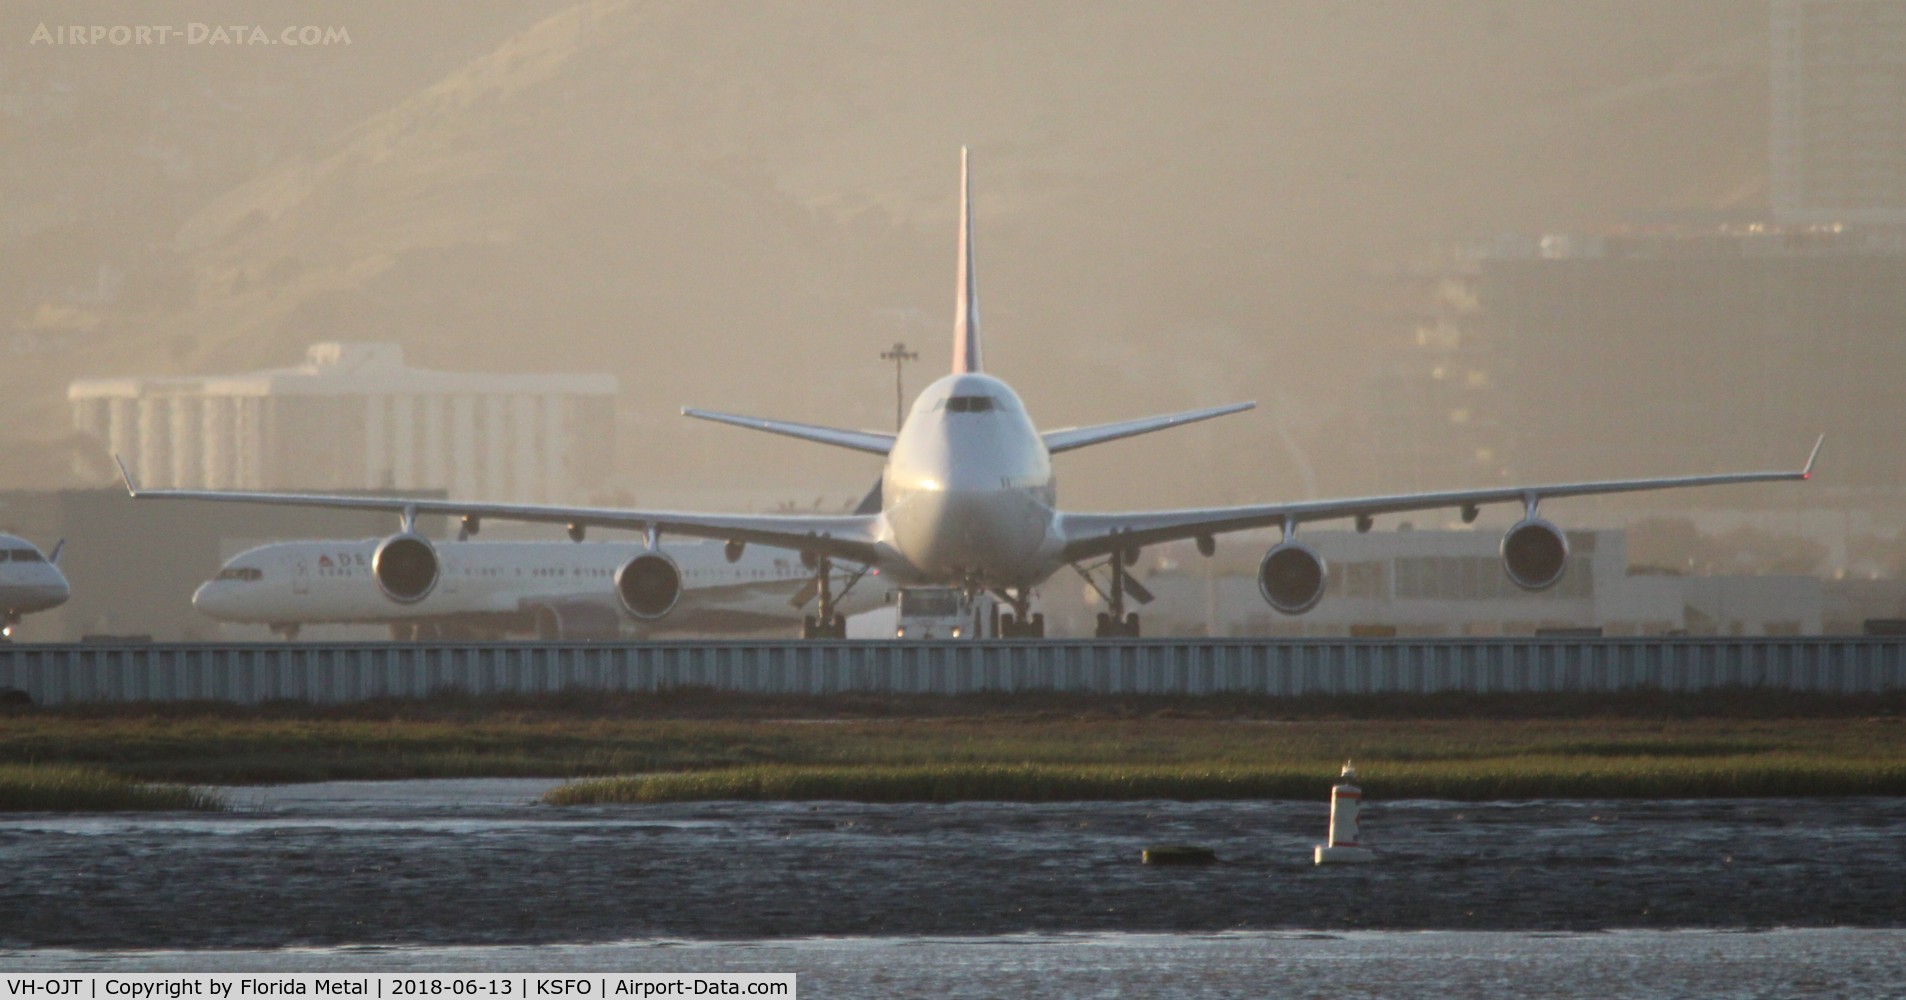 VH-OJT, 1999 Boeing 747-438 C/N 25565, Qantas